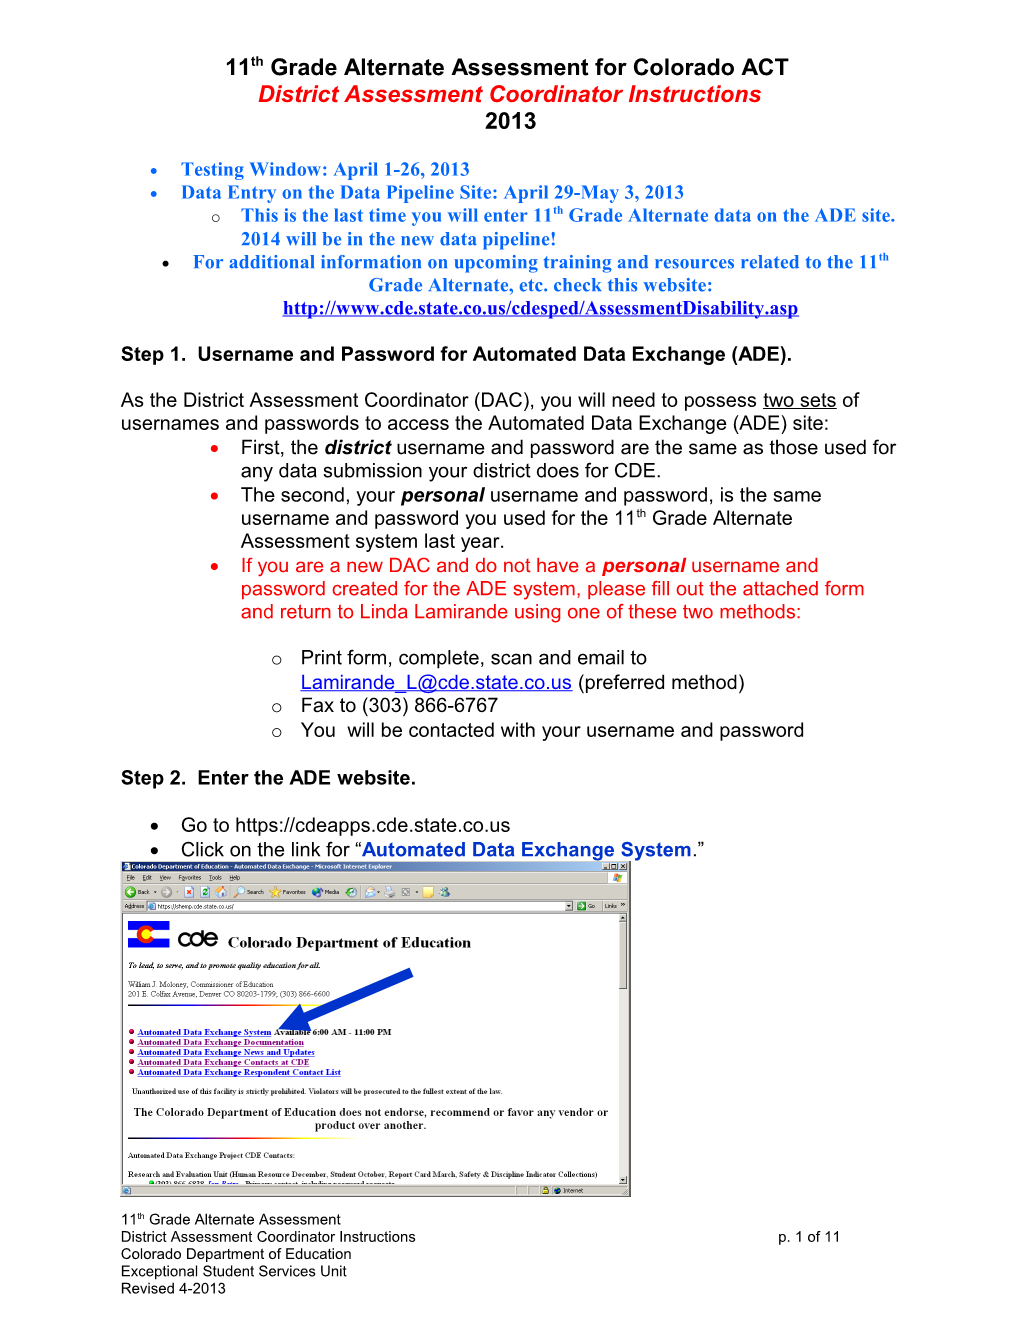 2003-2004 CSAPA Online Performance Demonstration